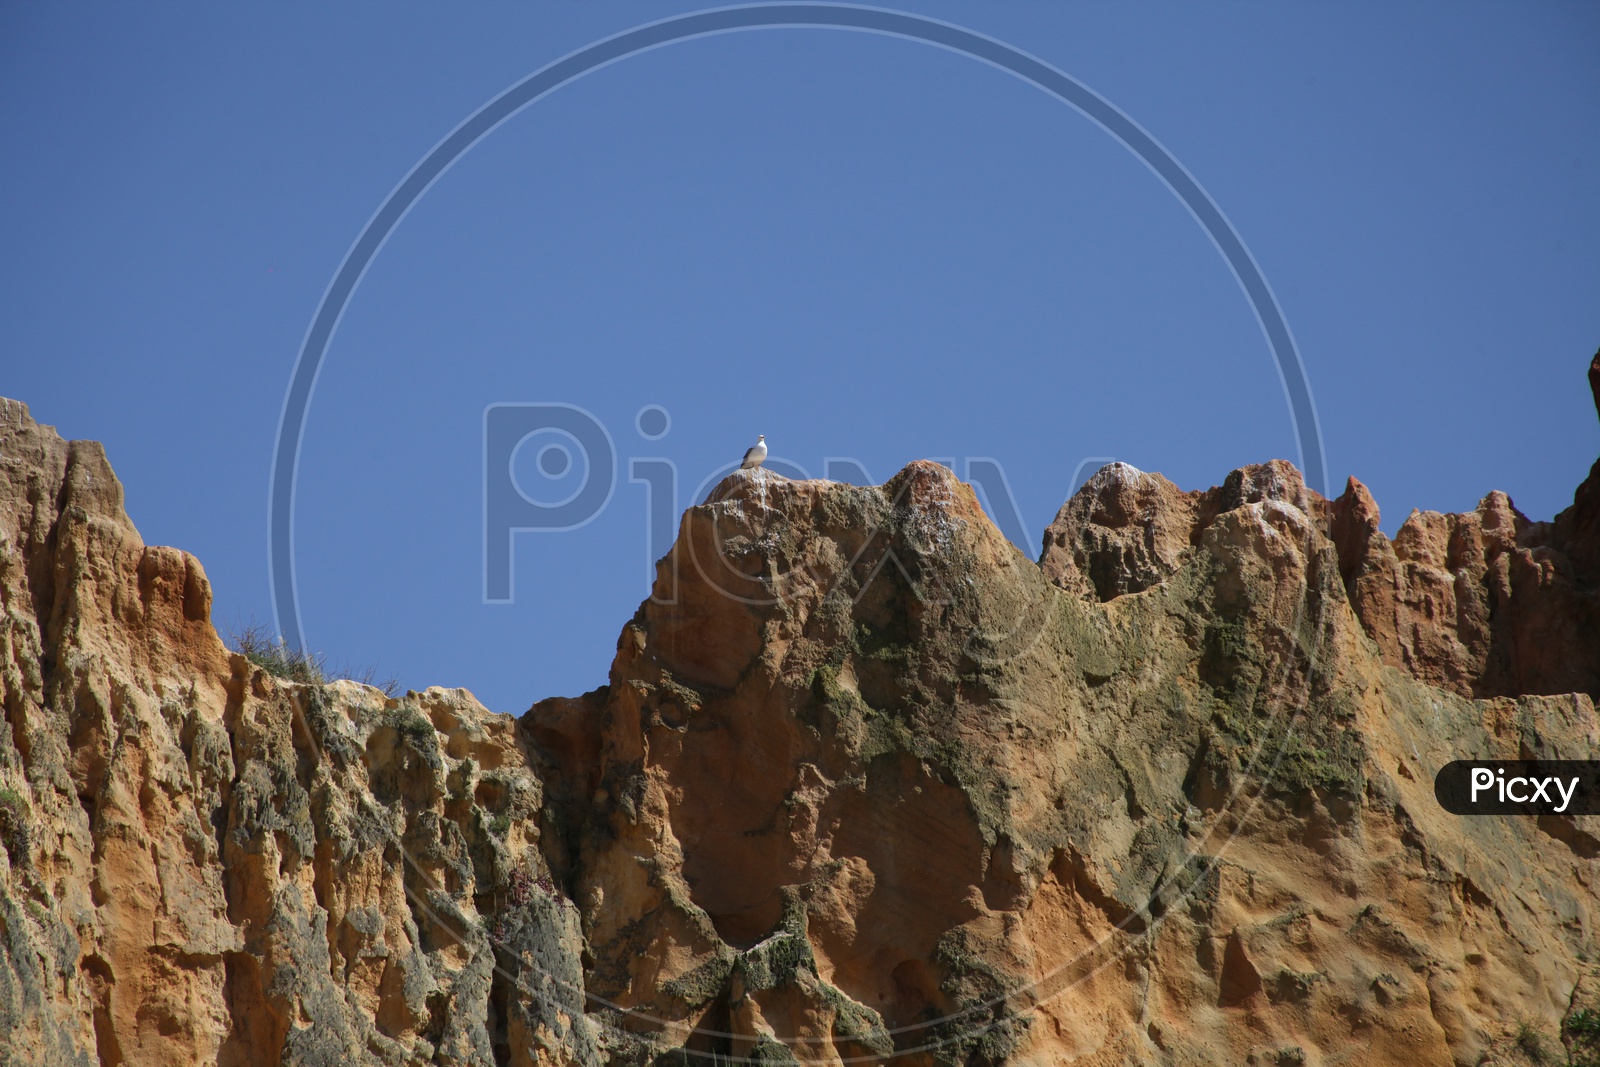 Sea gull on a cliff